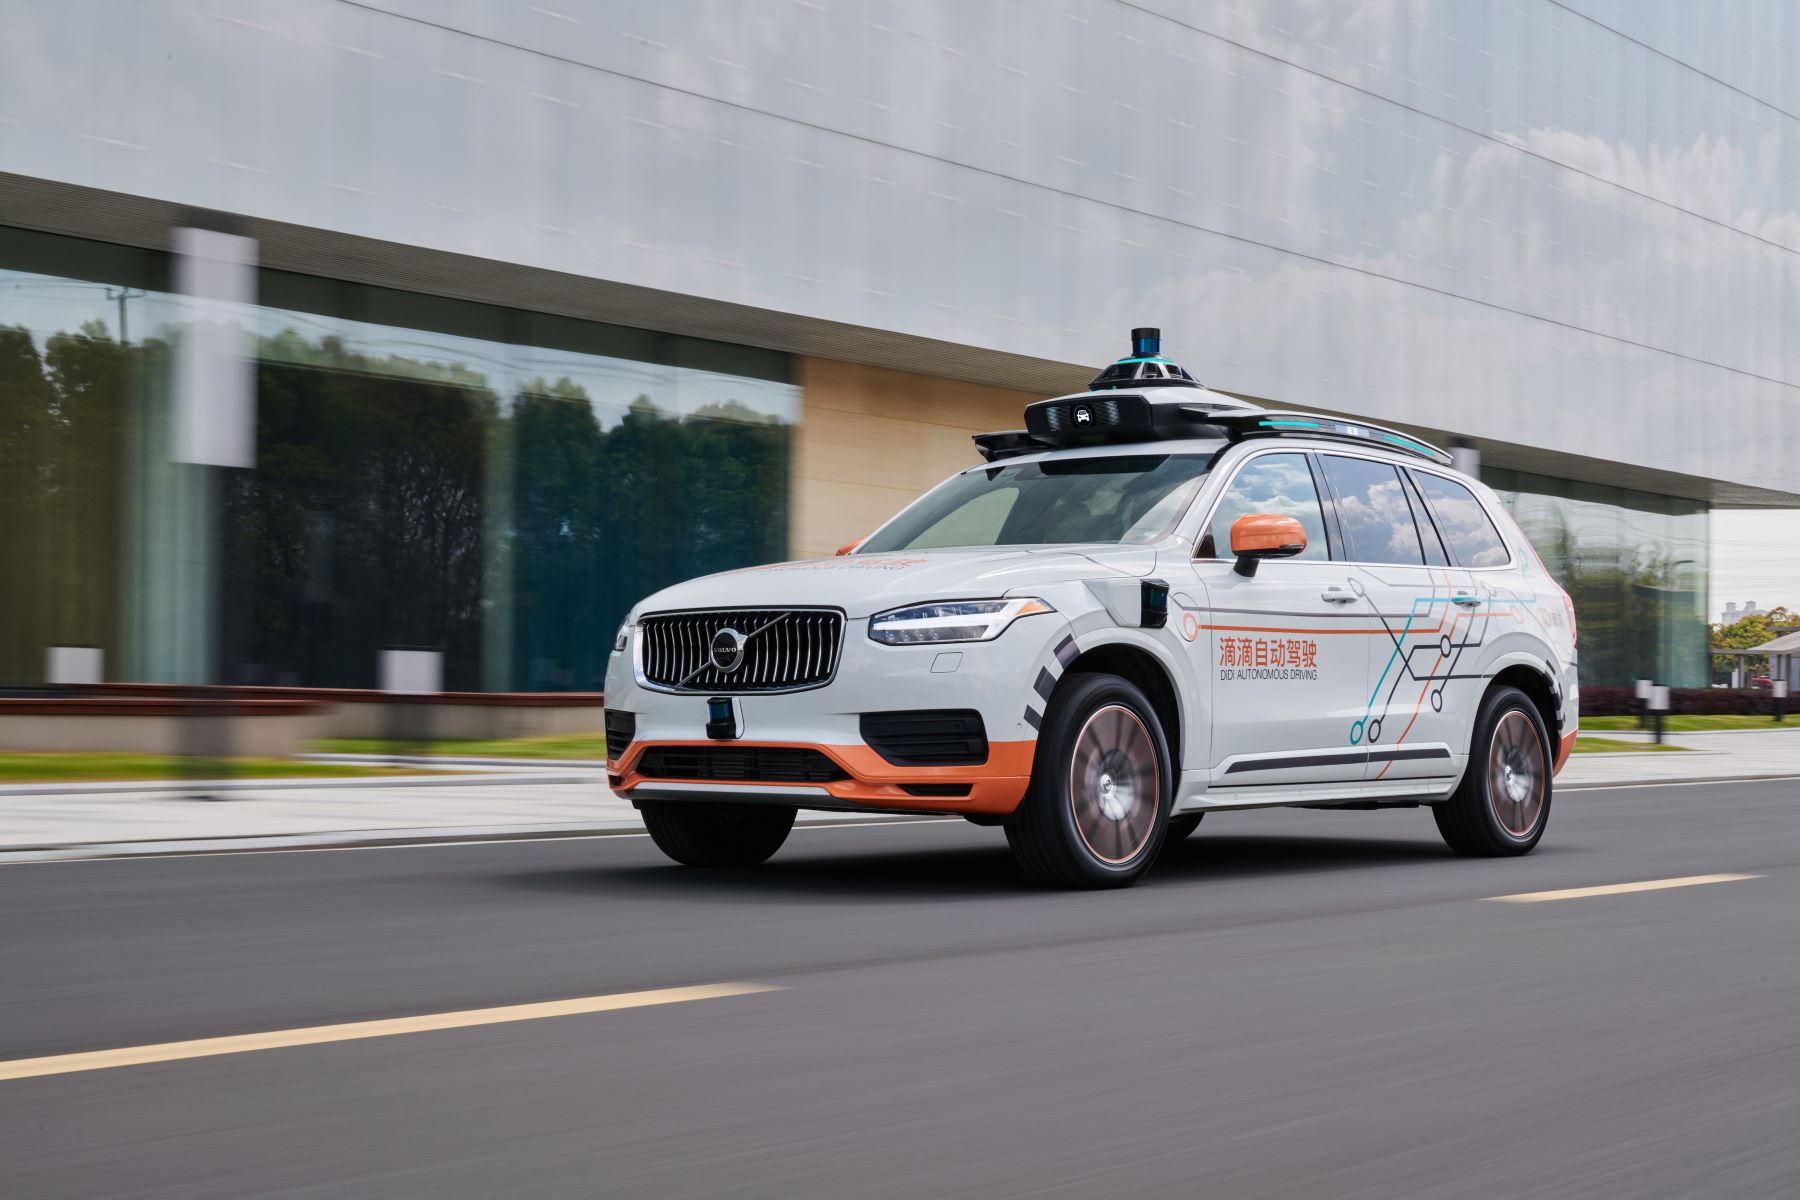 Volvo autonomous self-driving vehicle fleet testing with DiDi